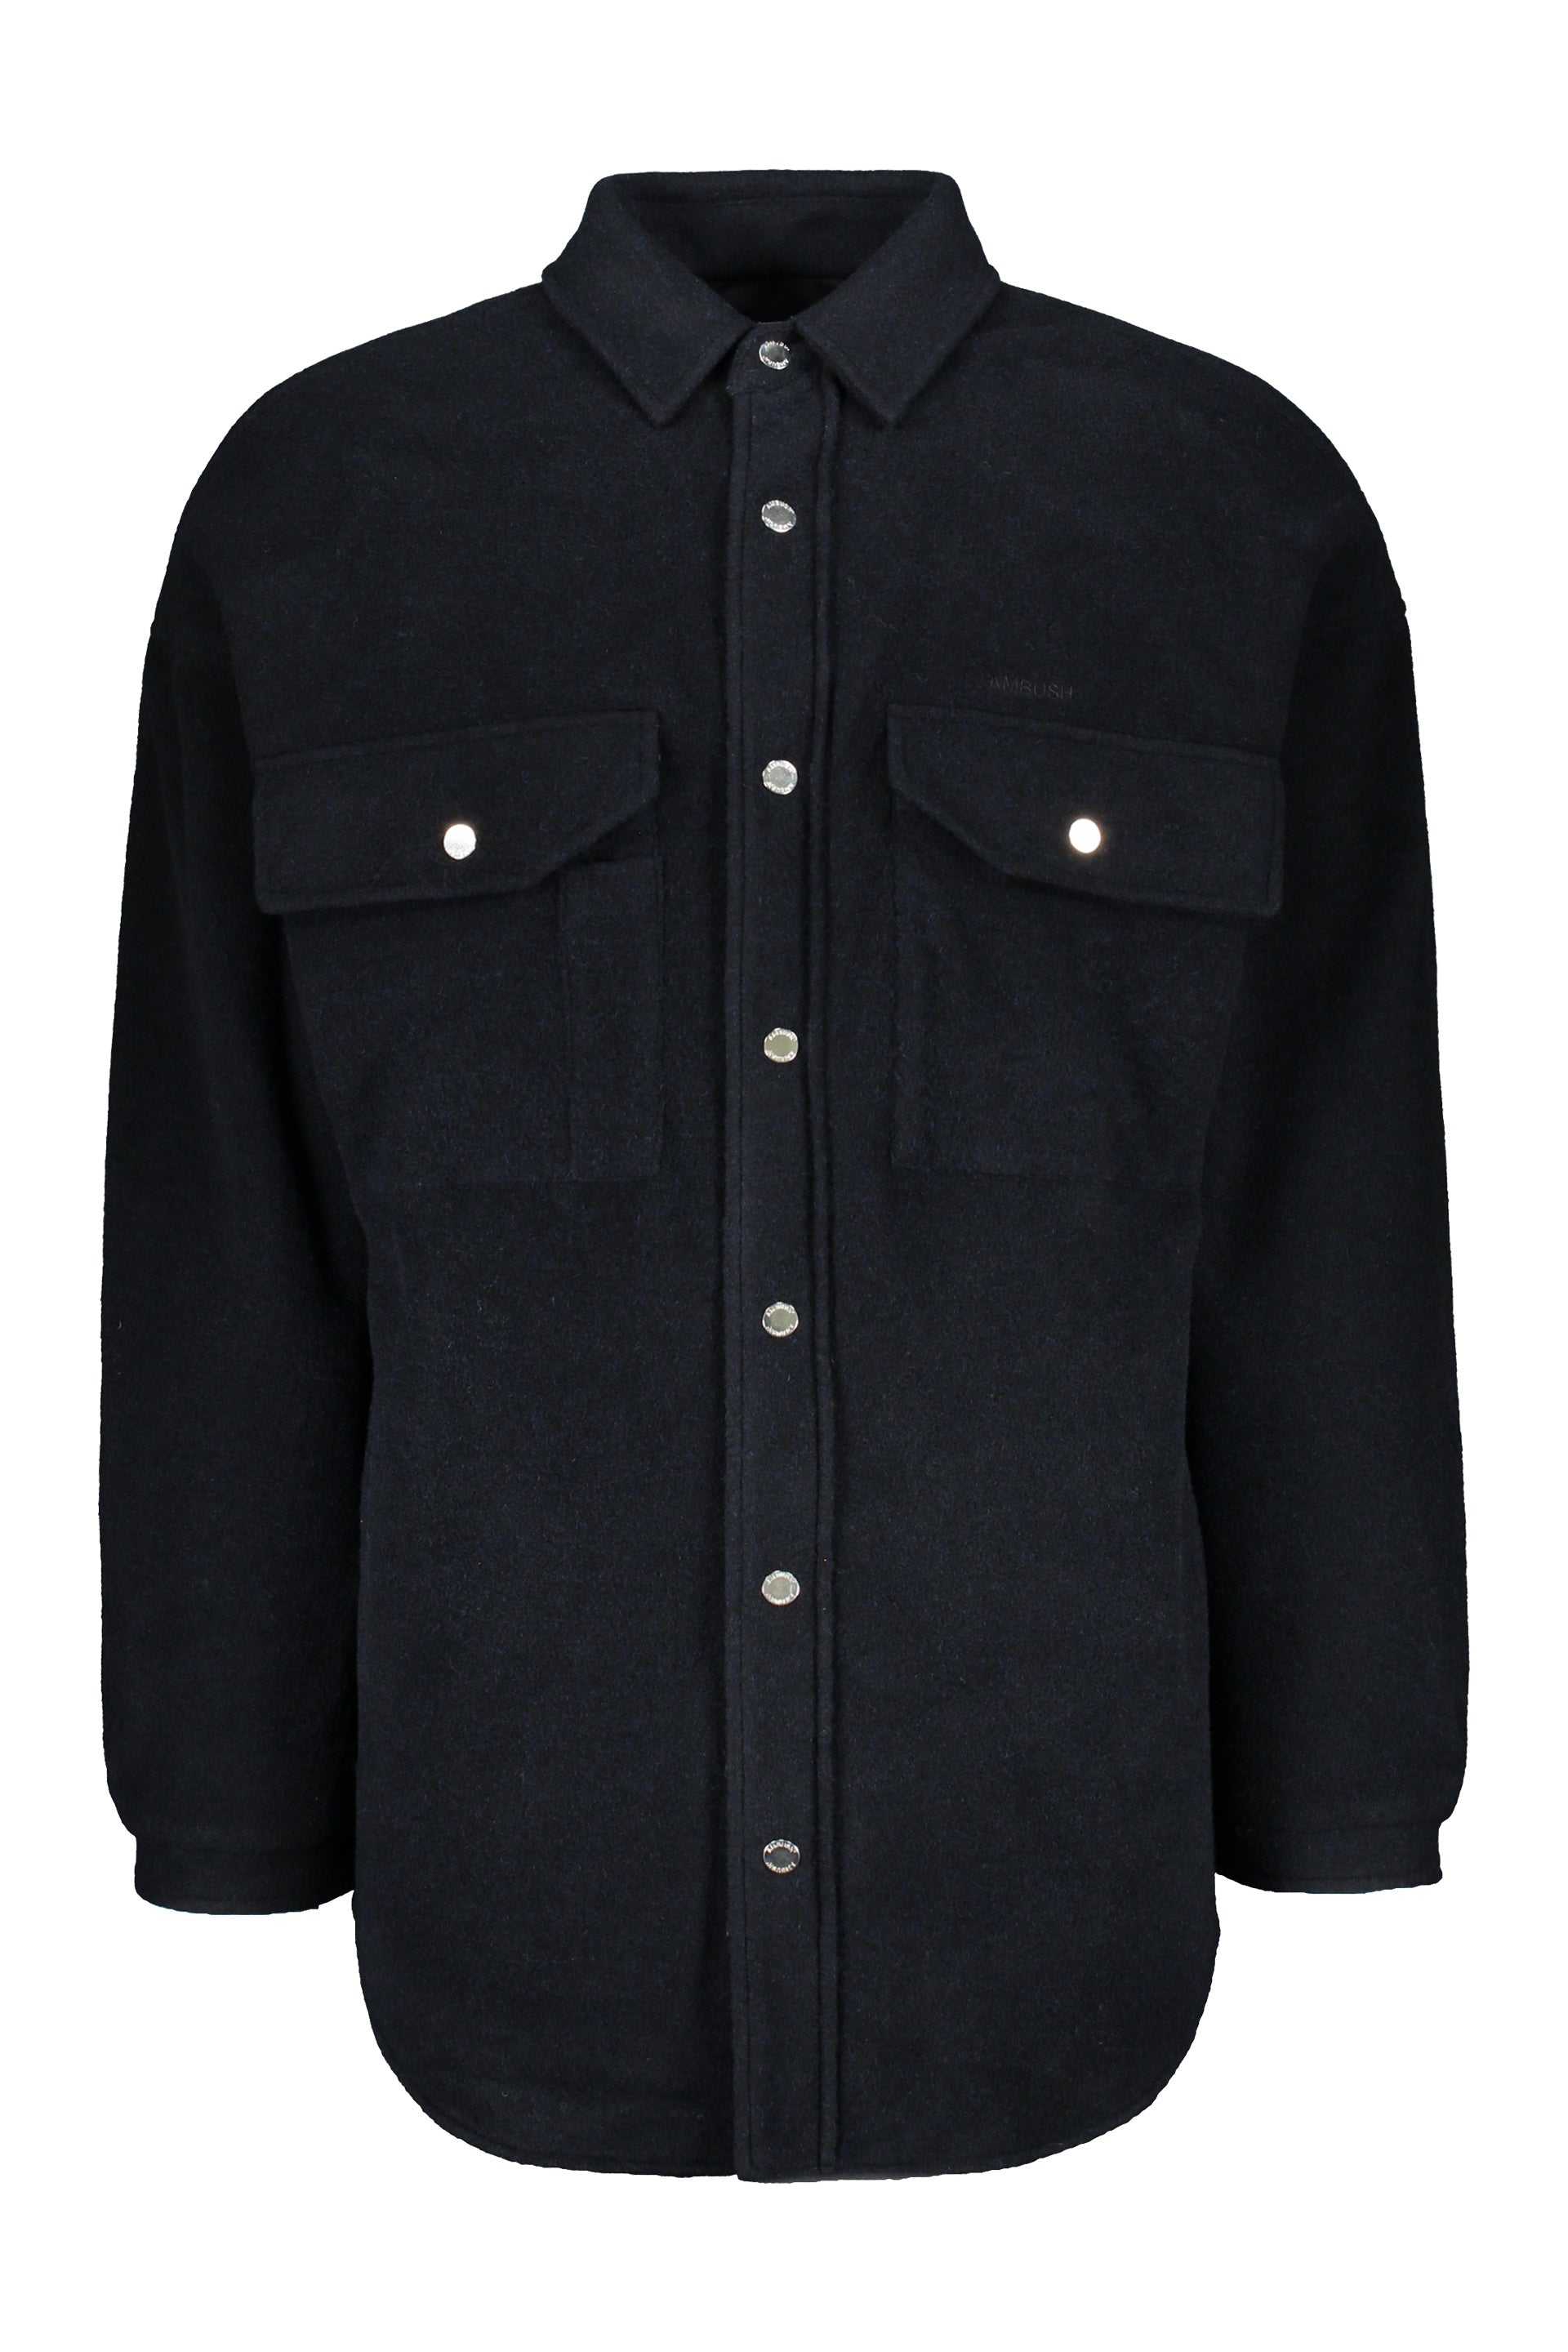 AMBUSH-OUTLET-SALE-Buttoned-jacket-Jacken-Mantel-44-ARCHIVE-COLLECTION.jpg